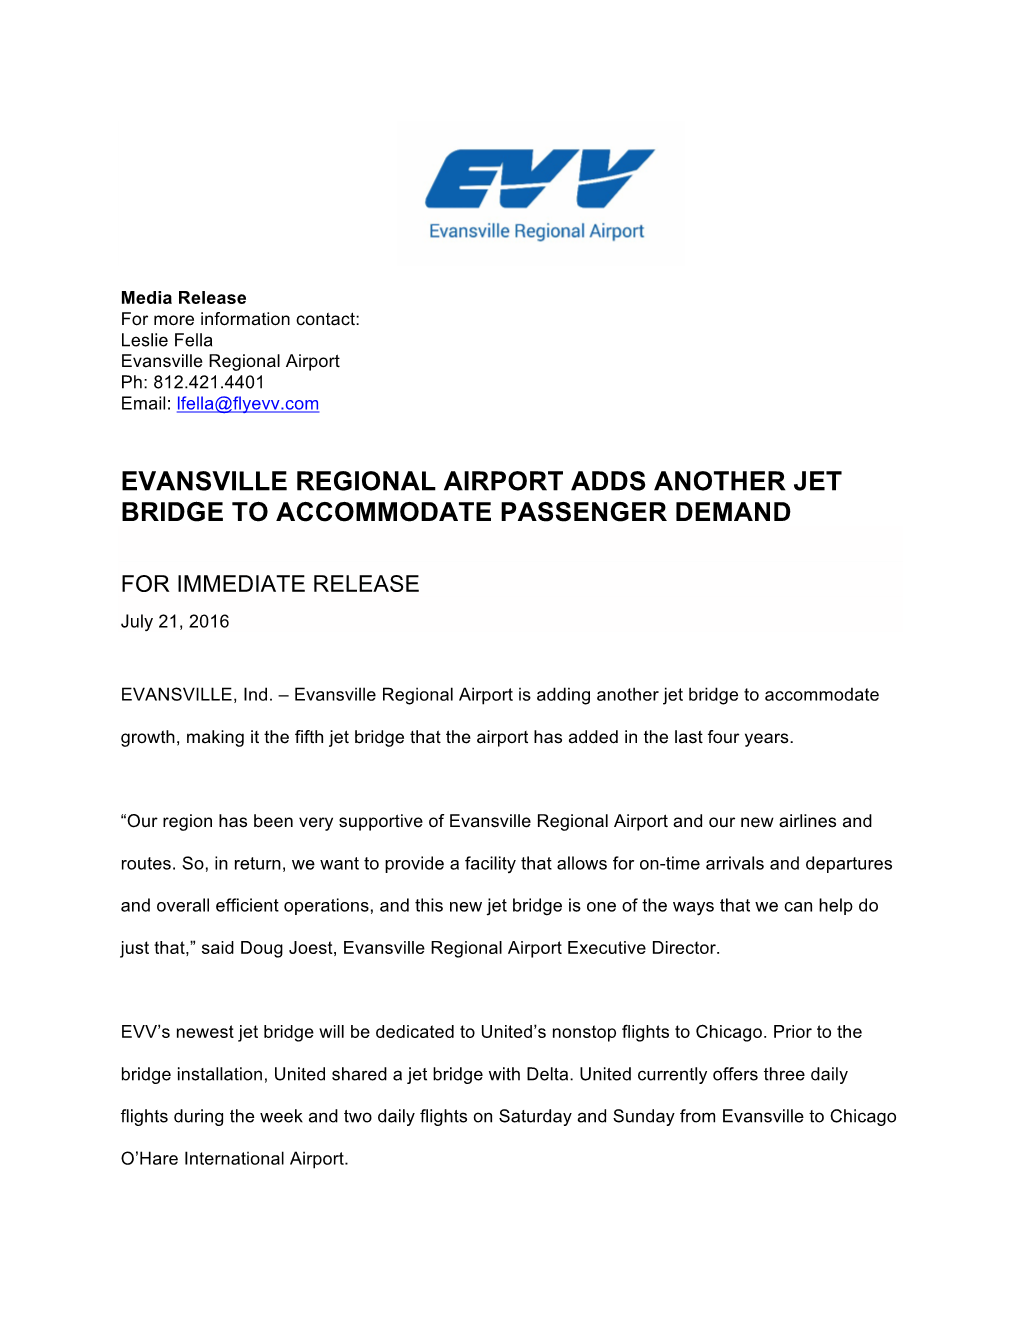 Evansville Regional Airport Adds Another Jet Bridge to Accommodate Passenger Demand